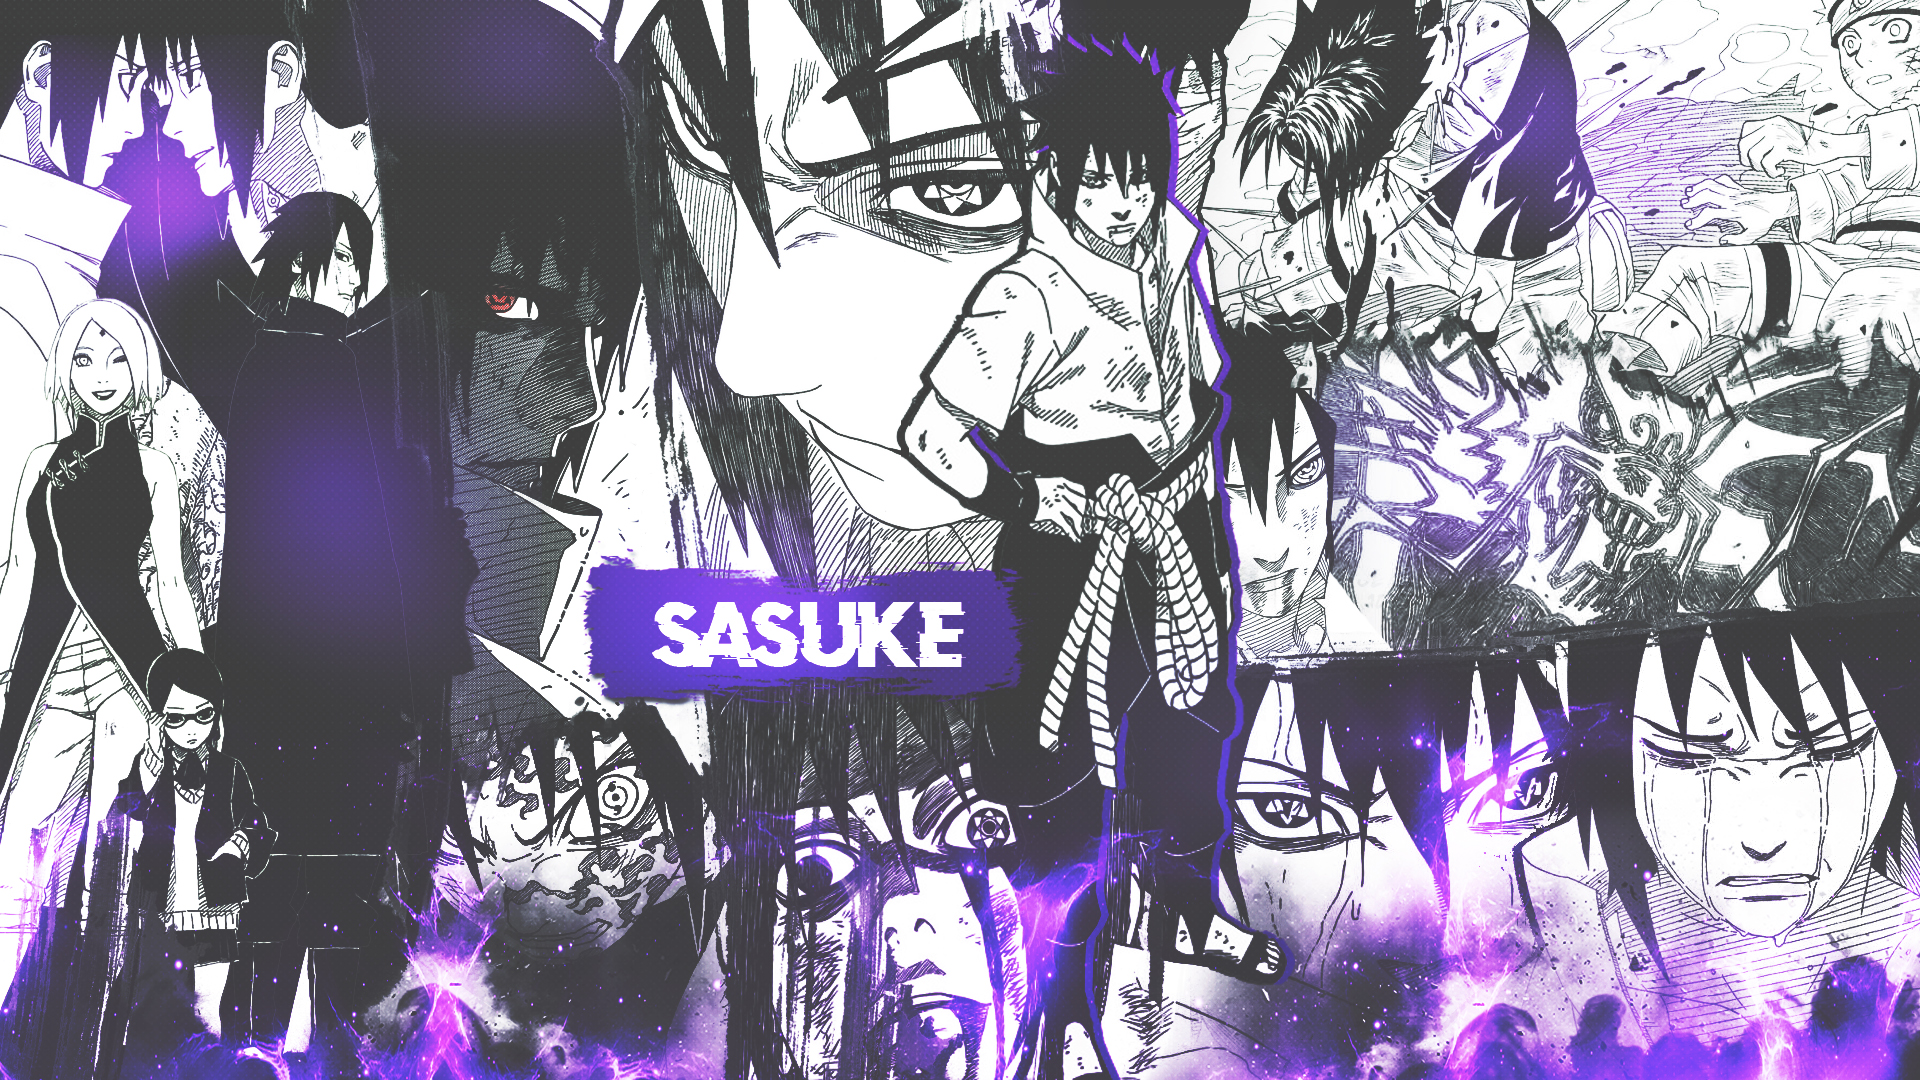 Anime 1920x1080 anime anime boys Uchiha Sasuke Naruto Shippuden manga DeviantArt collage black purple anime girls